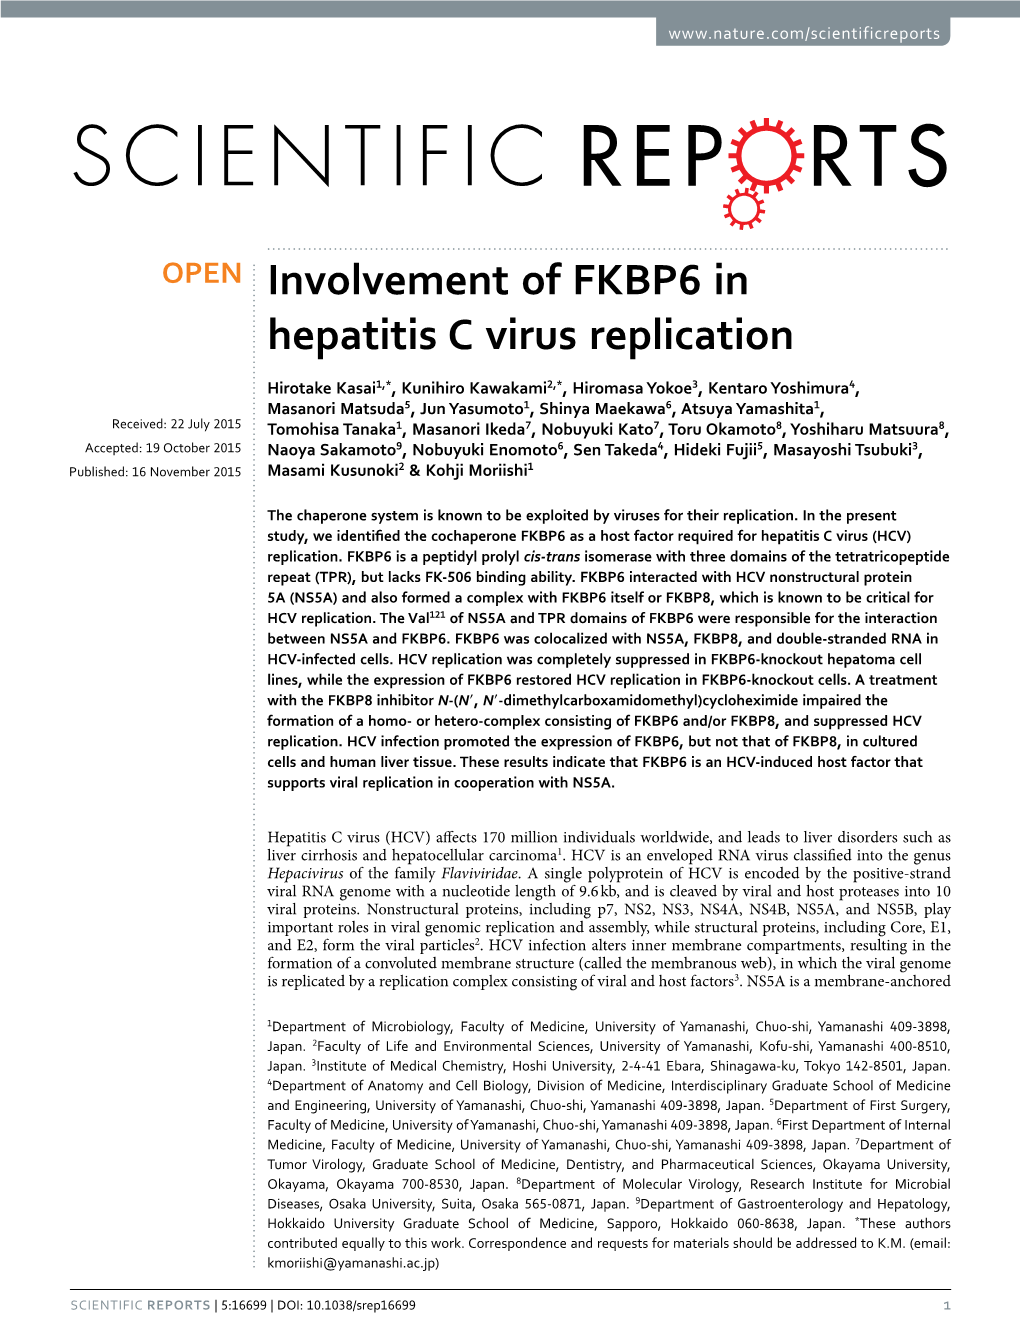 Involvement of FKBP6 in Hepatitis C Virus Replication